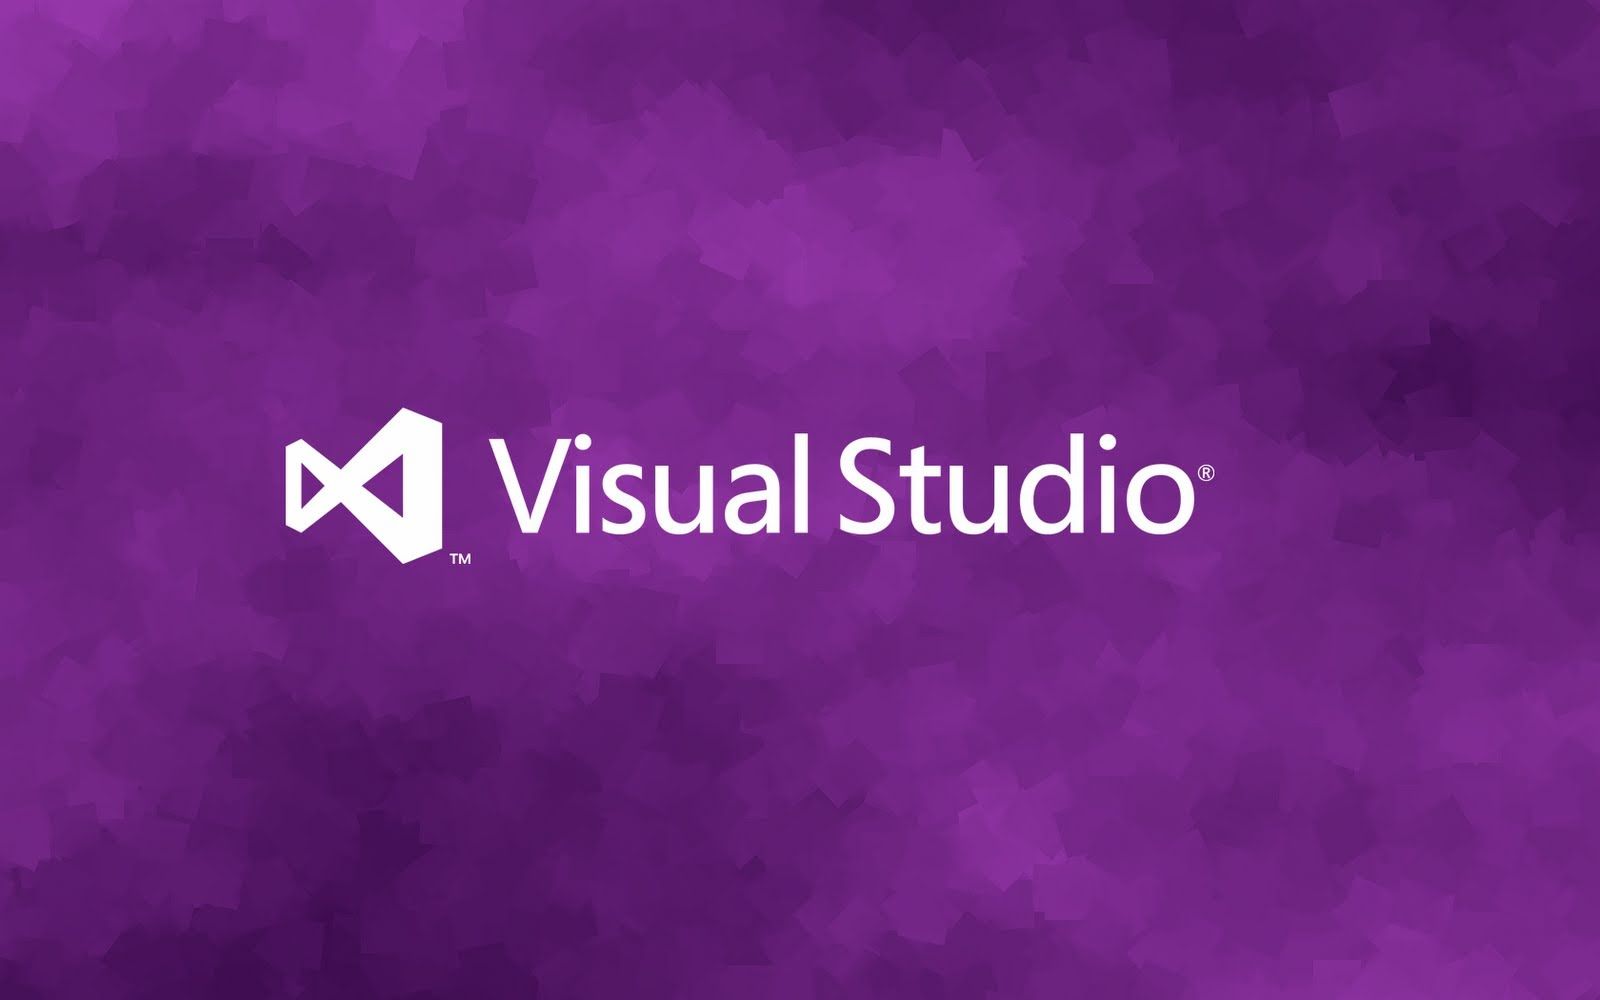 Visual Studio Wallpaper. Blur Studio